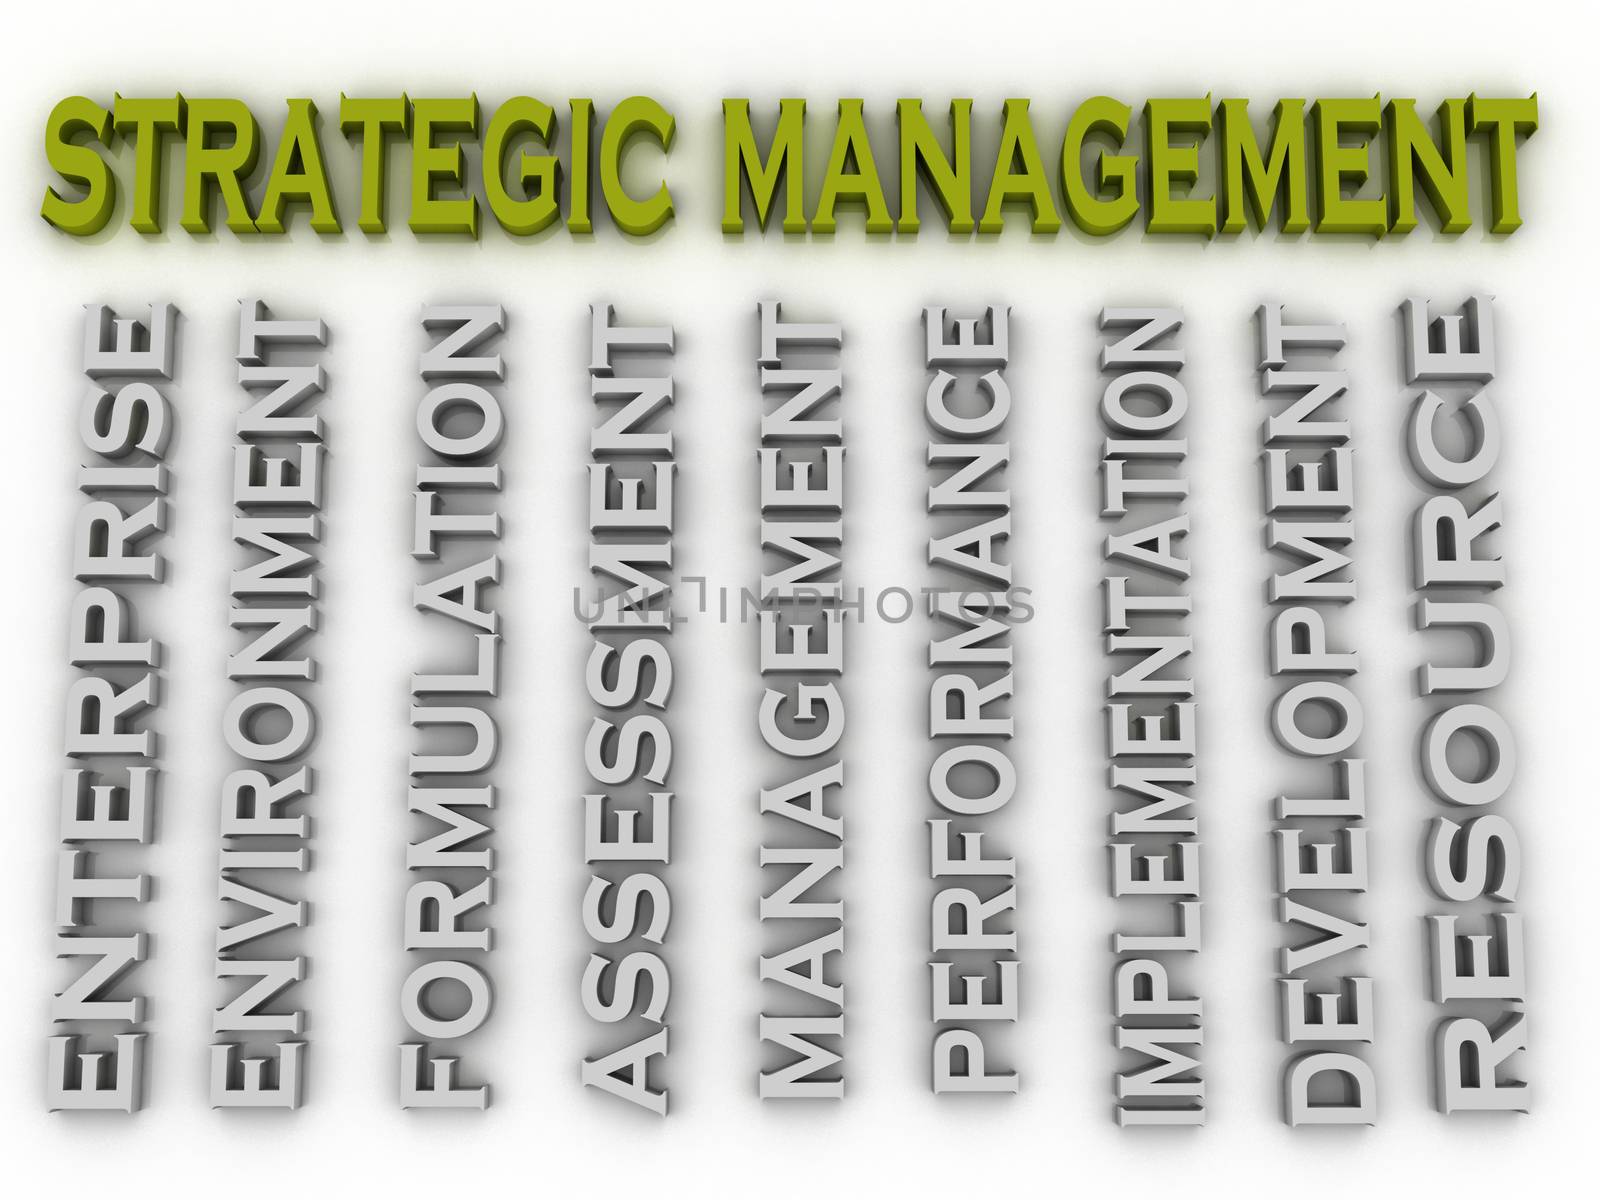 3d image Strategic management issues concept word cloud backgrou by dacasdo